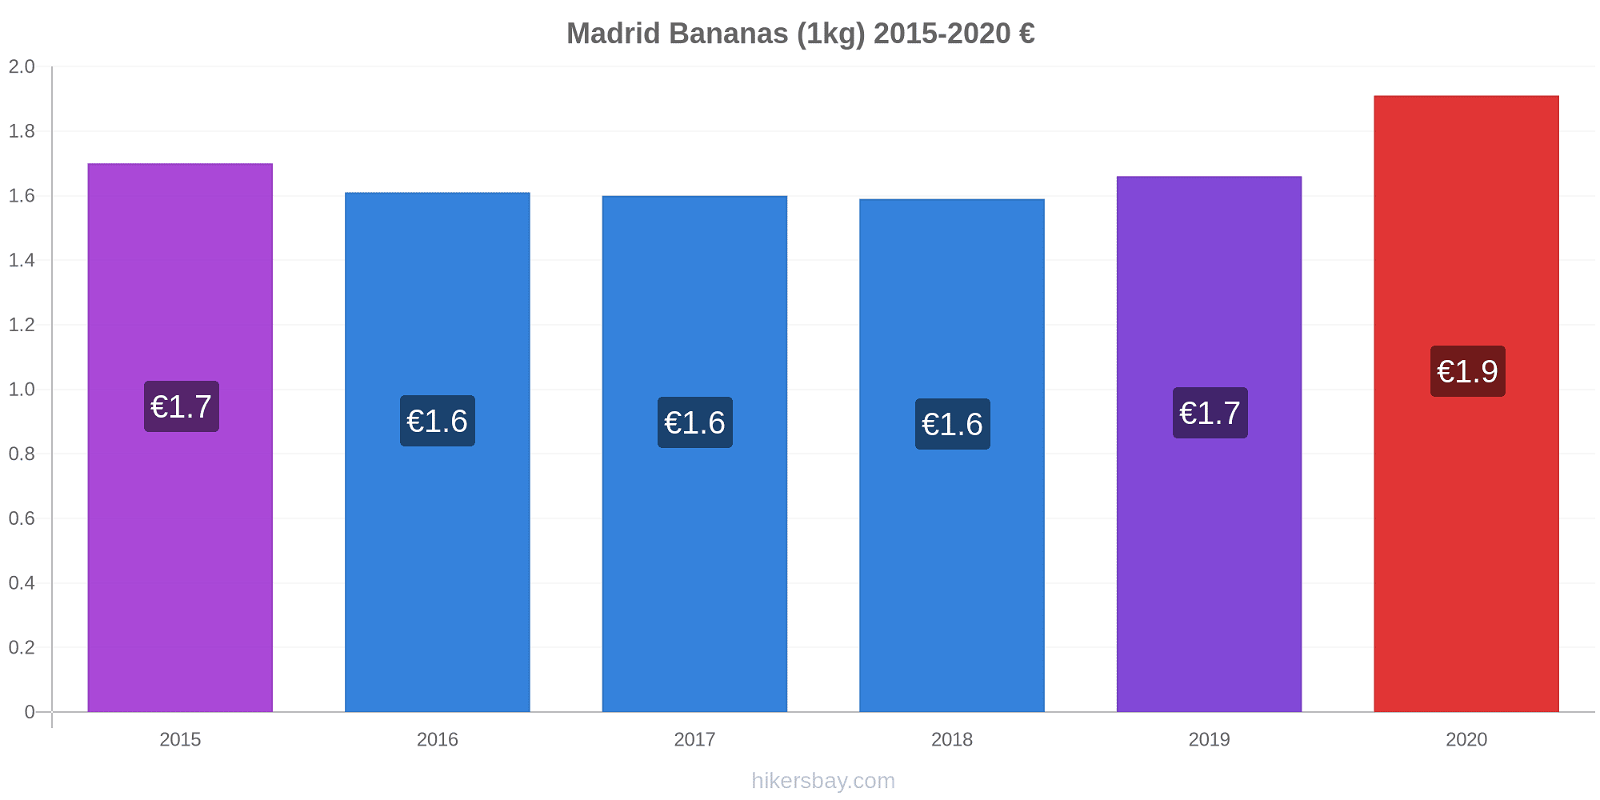 Madrid price changes Bananas (1kg) hikersbay.com